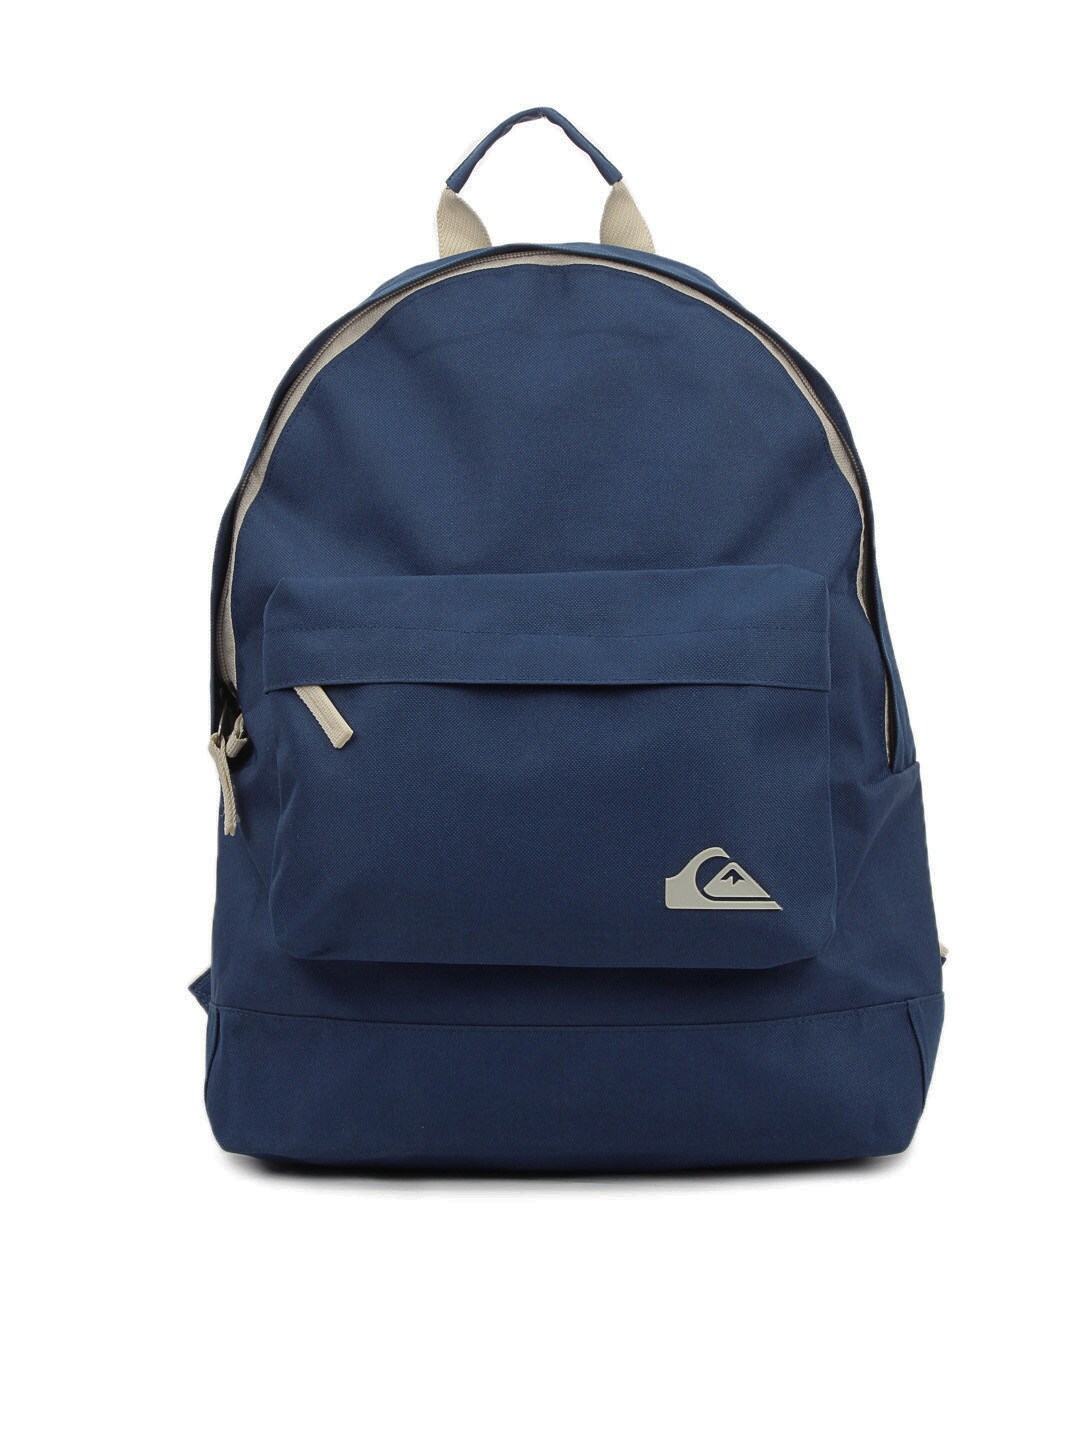 Quiksilver Unisex Navy Blue Backpack